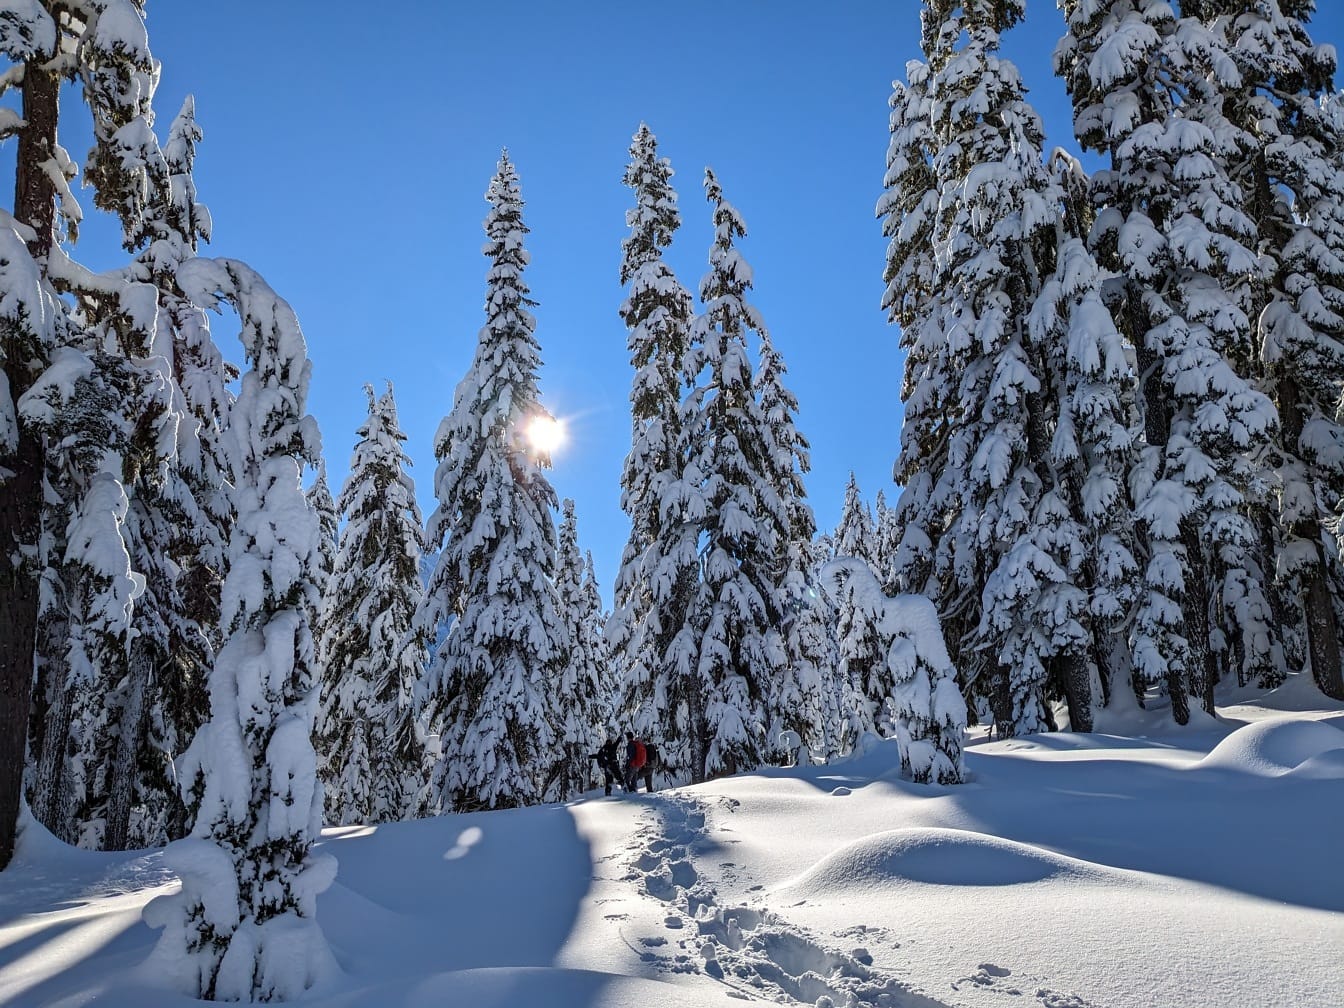 Par planinara hoda kroz duboki snijeg u snježnoj šumi